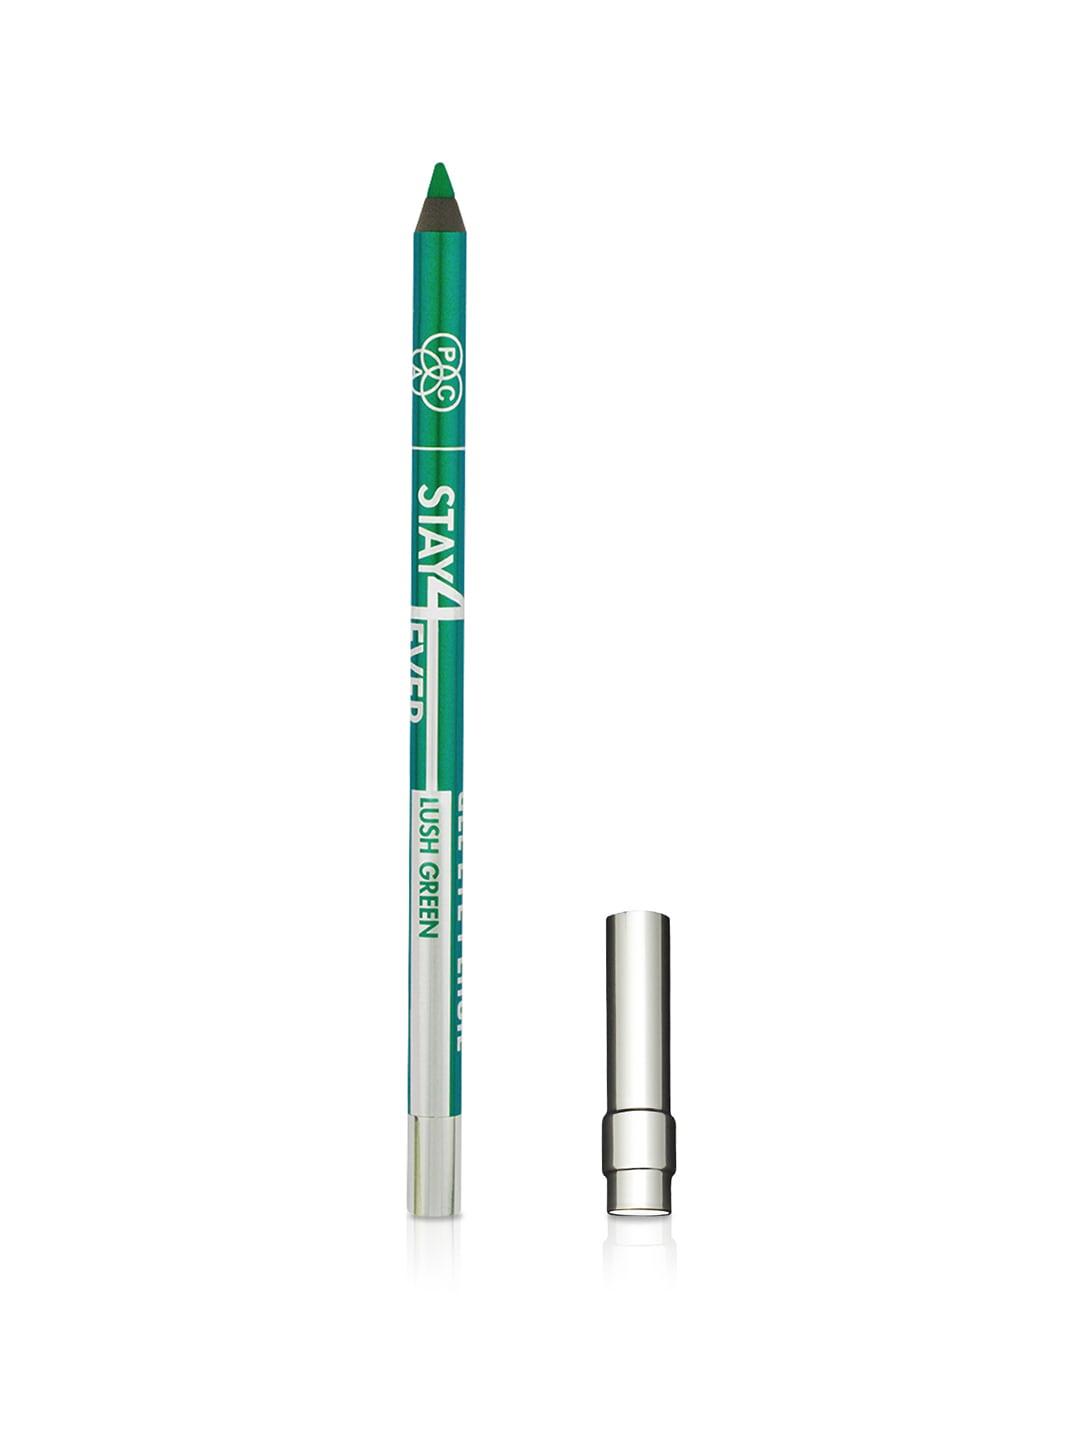 PAC Dermatologically Tested Waterproof Stay4Ever Gel Eye Pencil 1.6 g - Lush Green